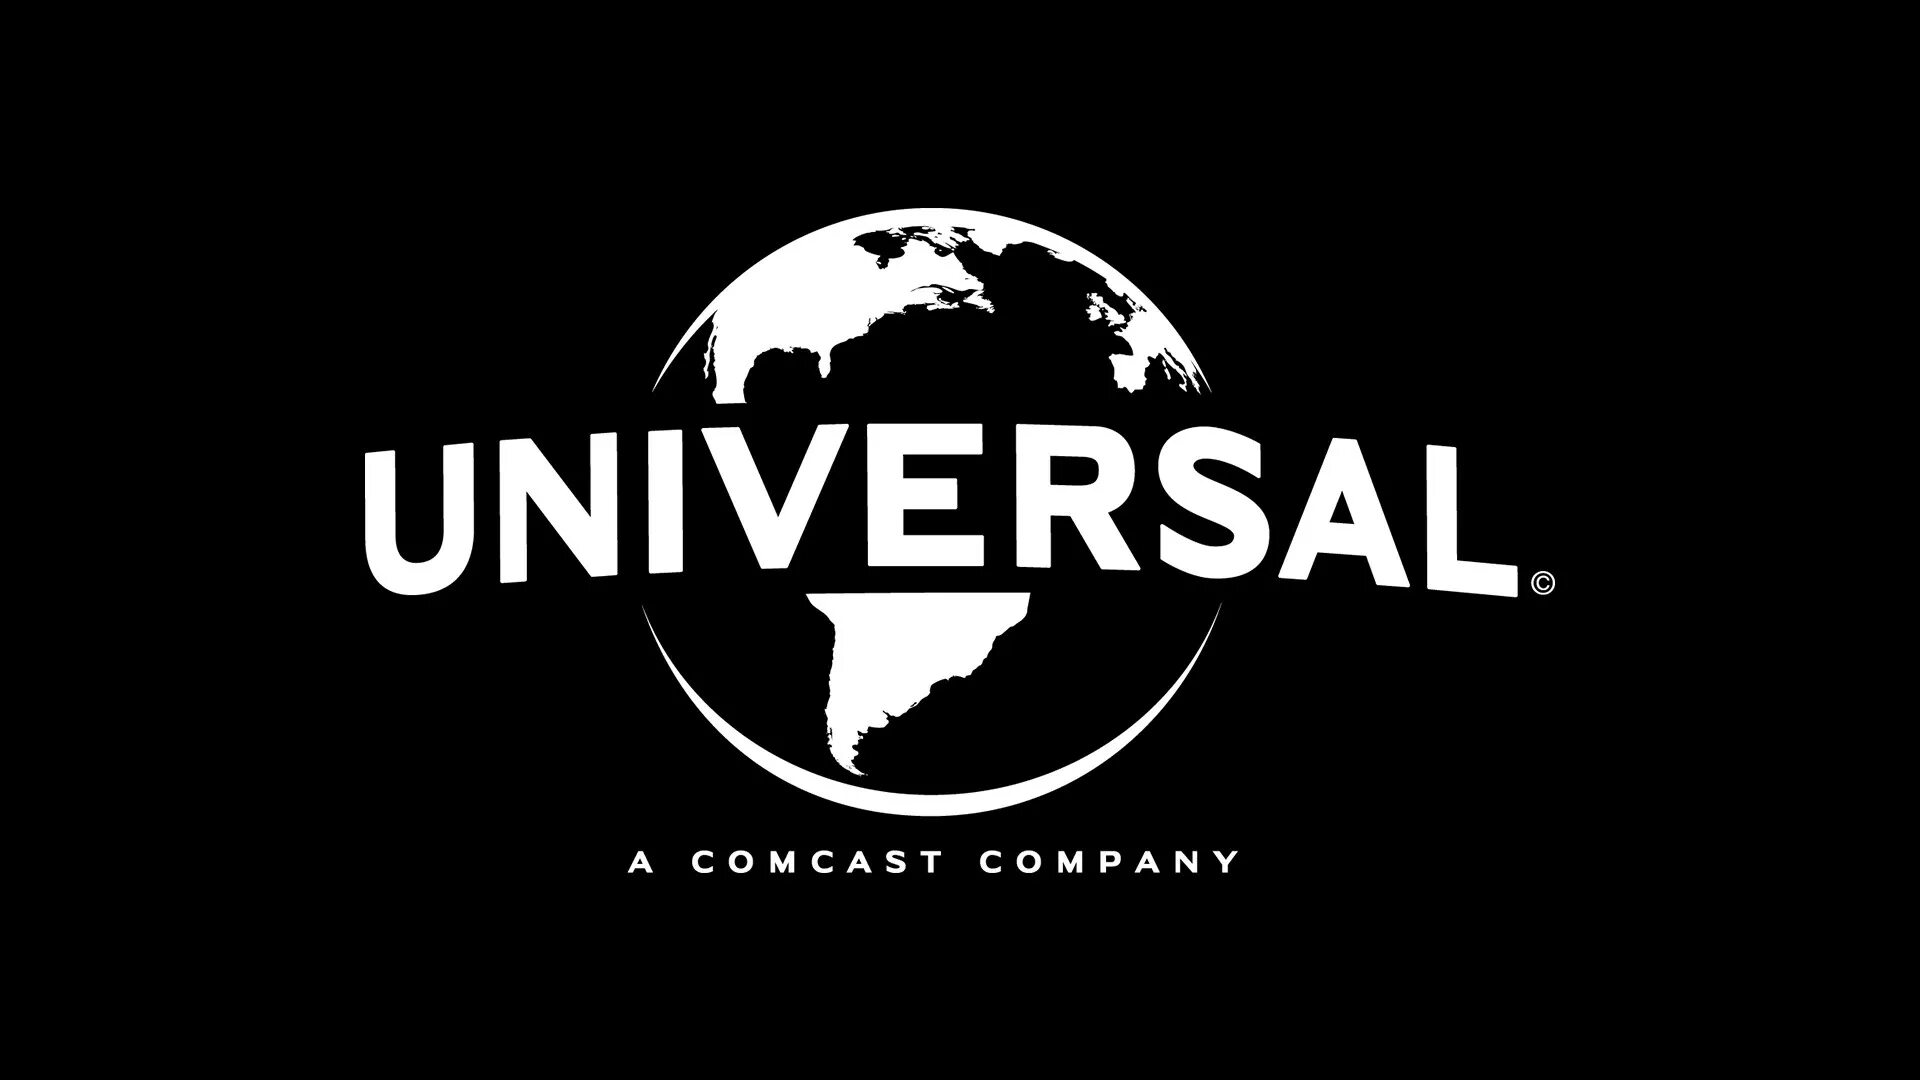 Юниверсал киностудия логотип. Кинокомпания Universal pictures. Логотип компании Юниверсал пикчерс. Юнивёрсал пикчерс логотип 1912. Компания пикчерз